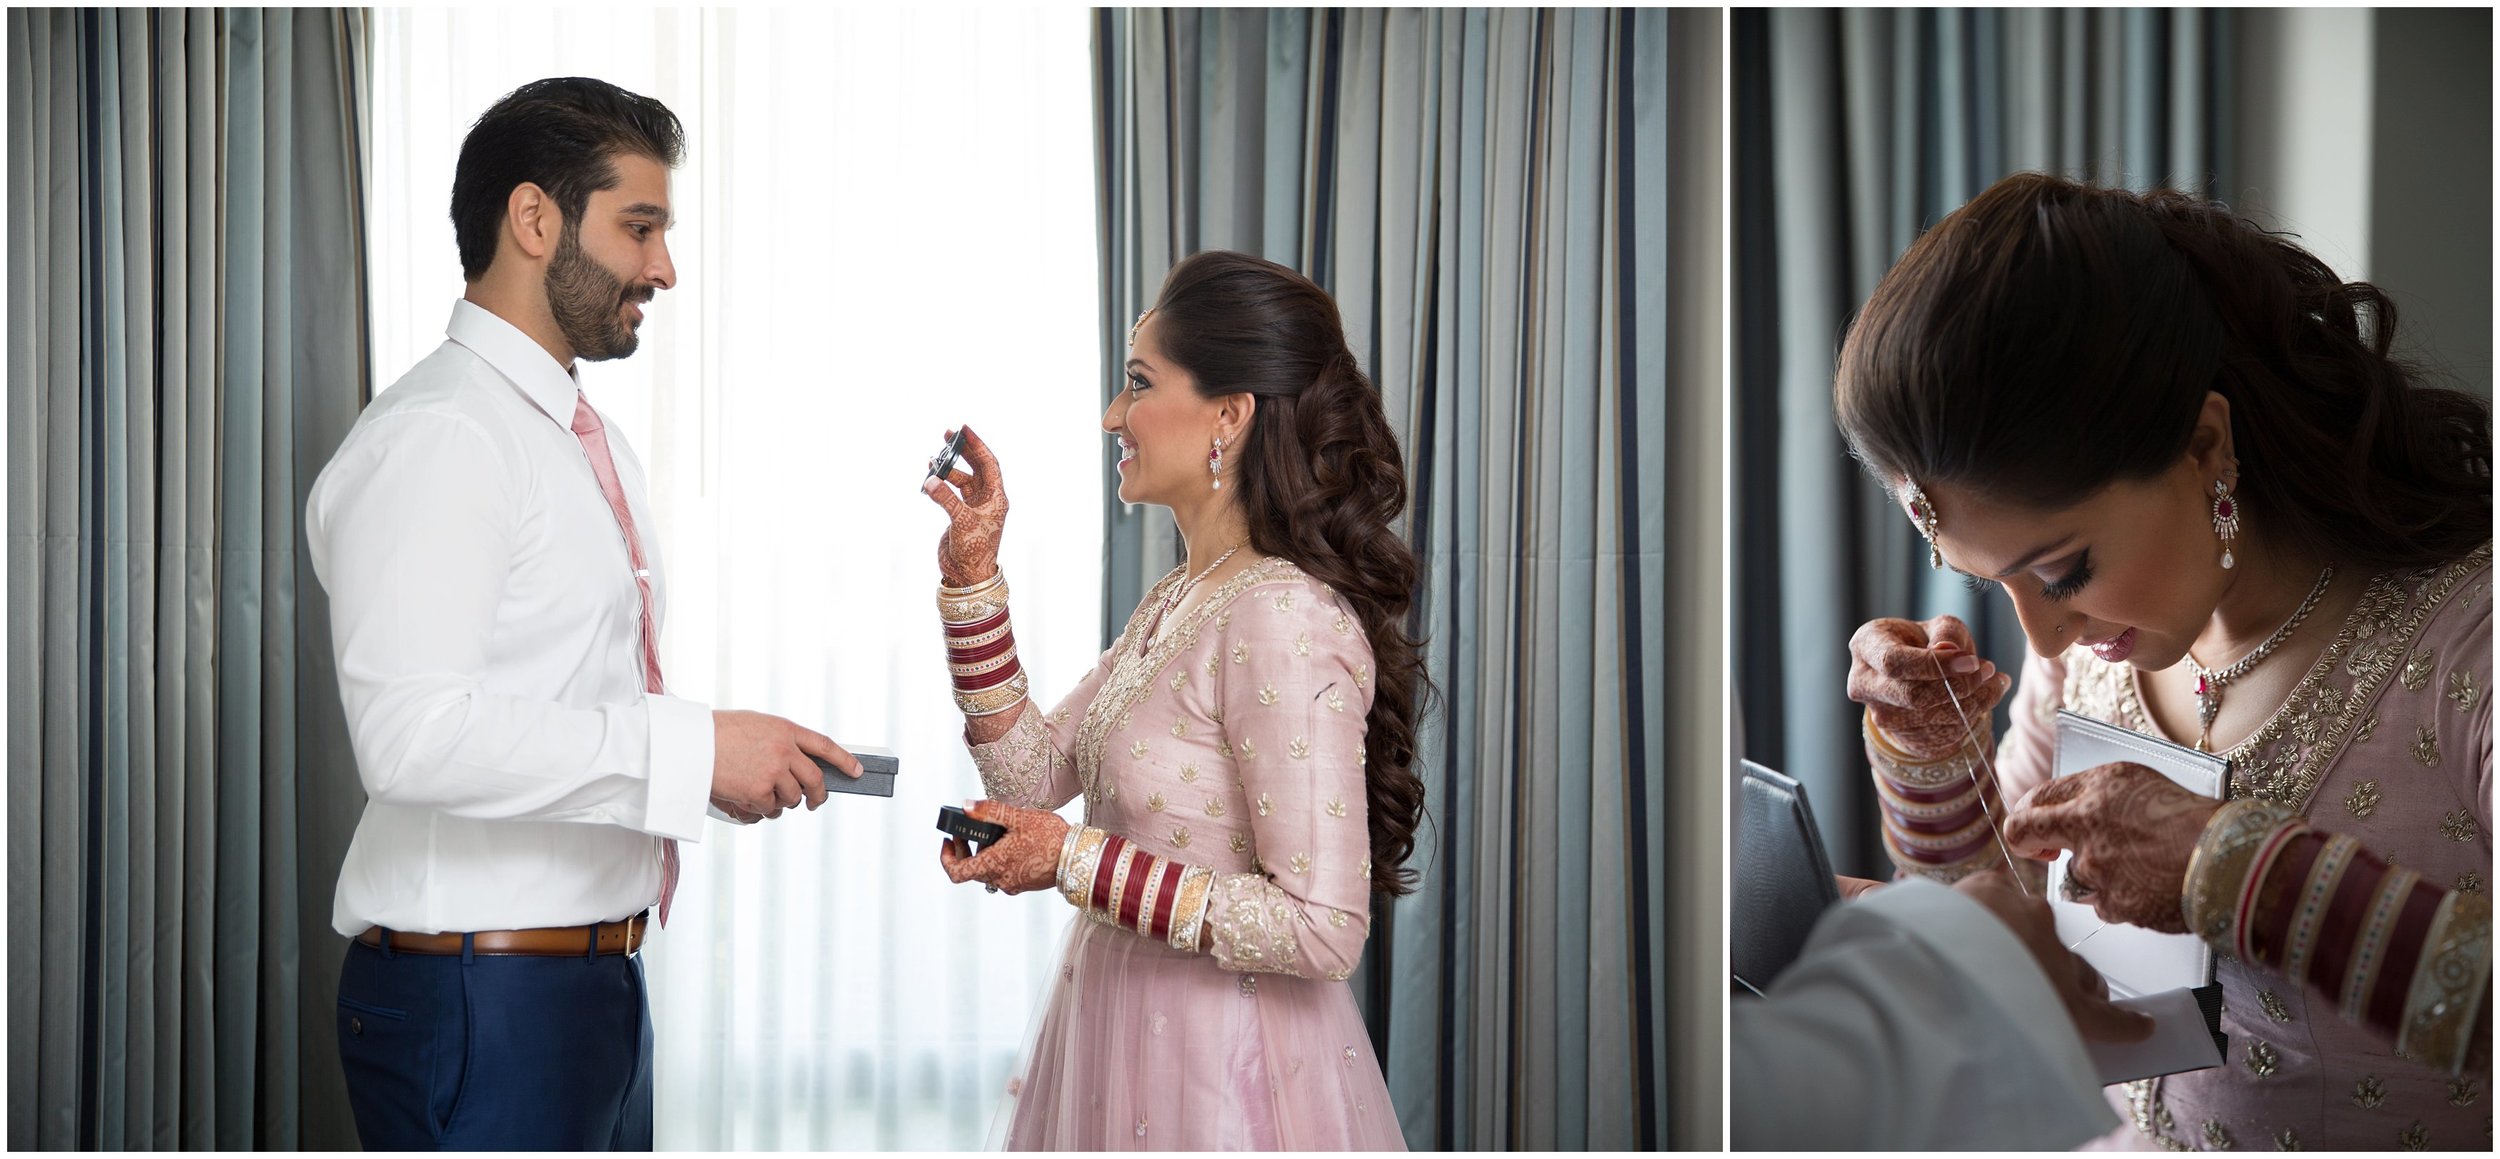 Le Cape Weddings - South Asian Wedding in Illinois - Tanvi and Anshul -1462_LuxuryDestinationPhotographer.jpg